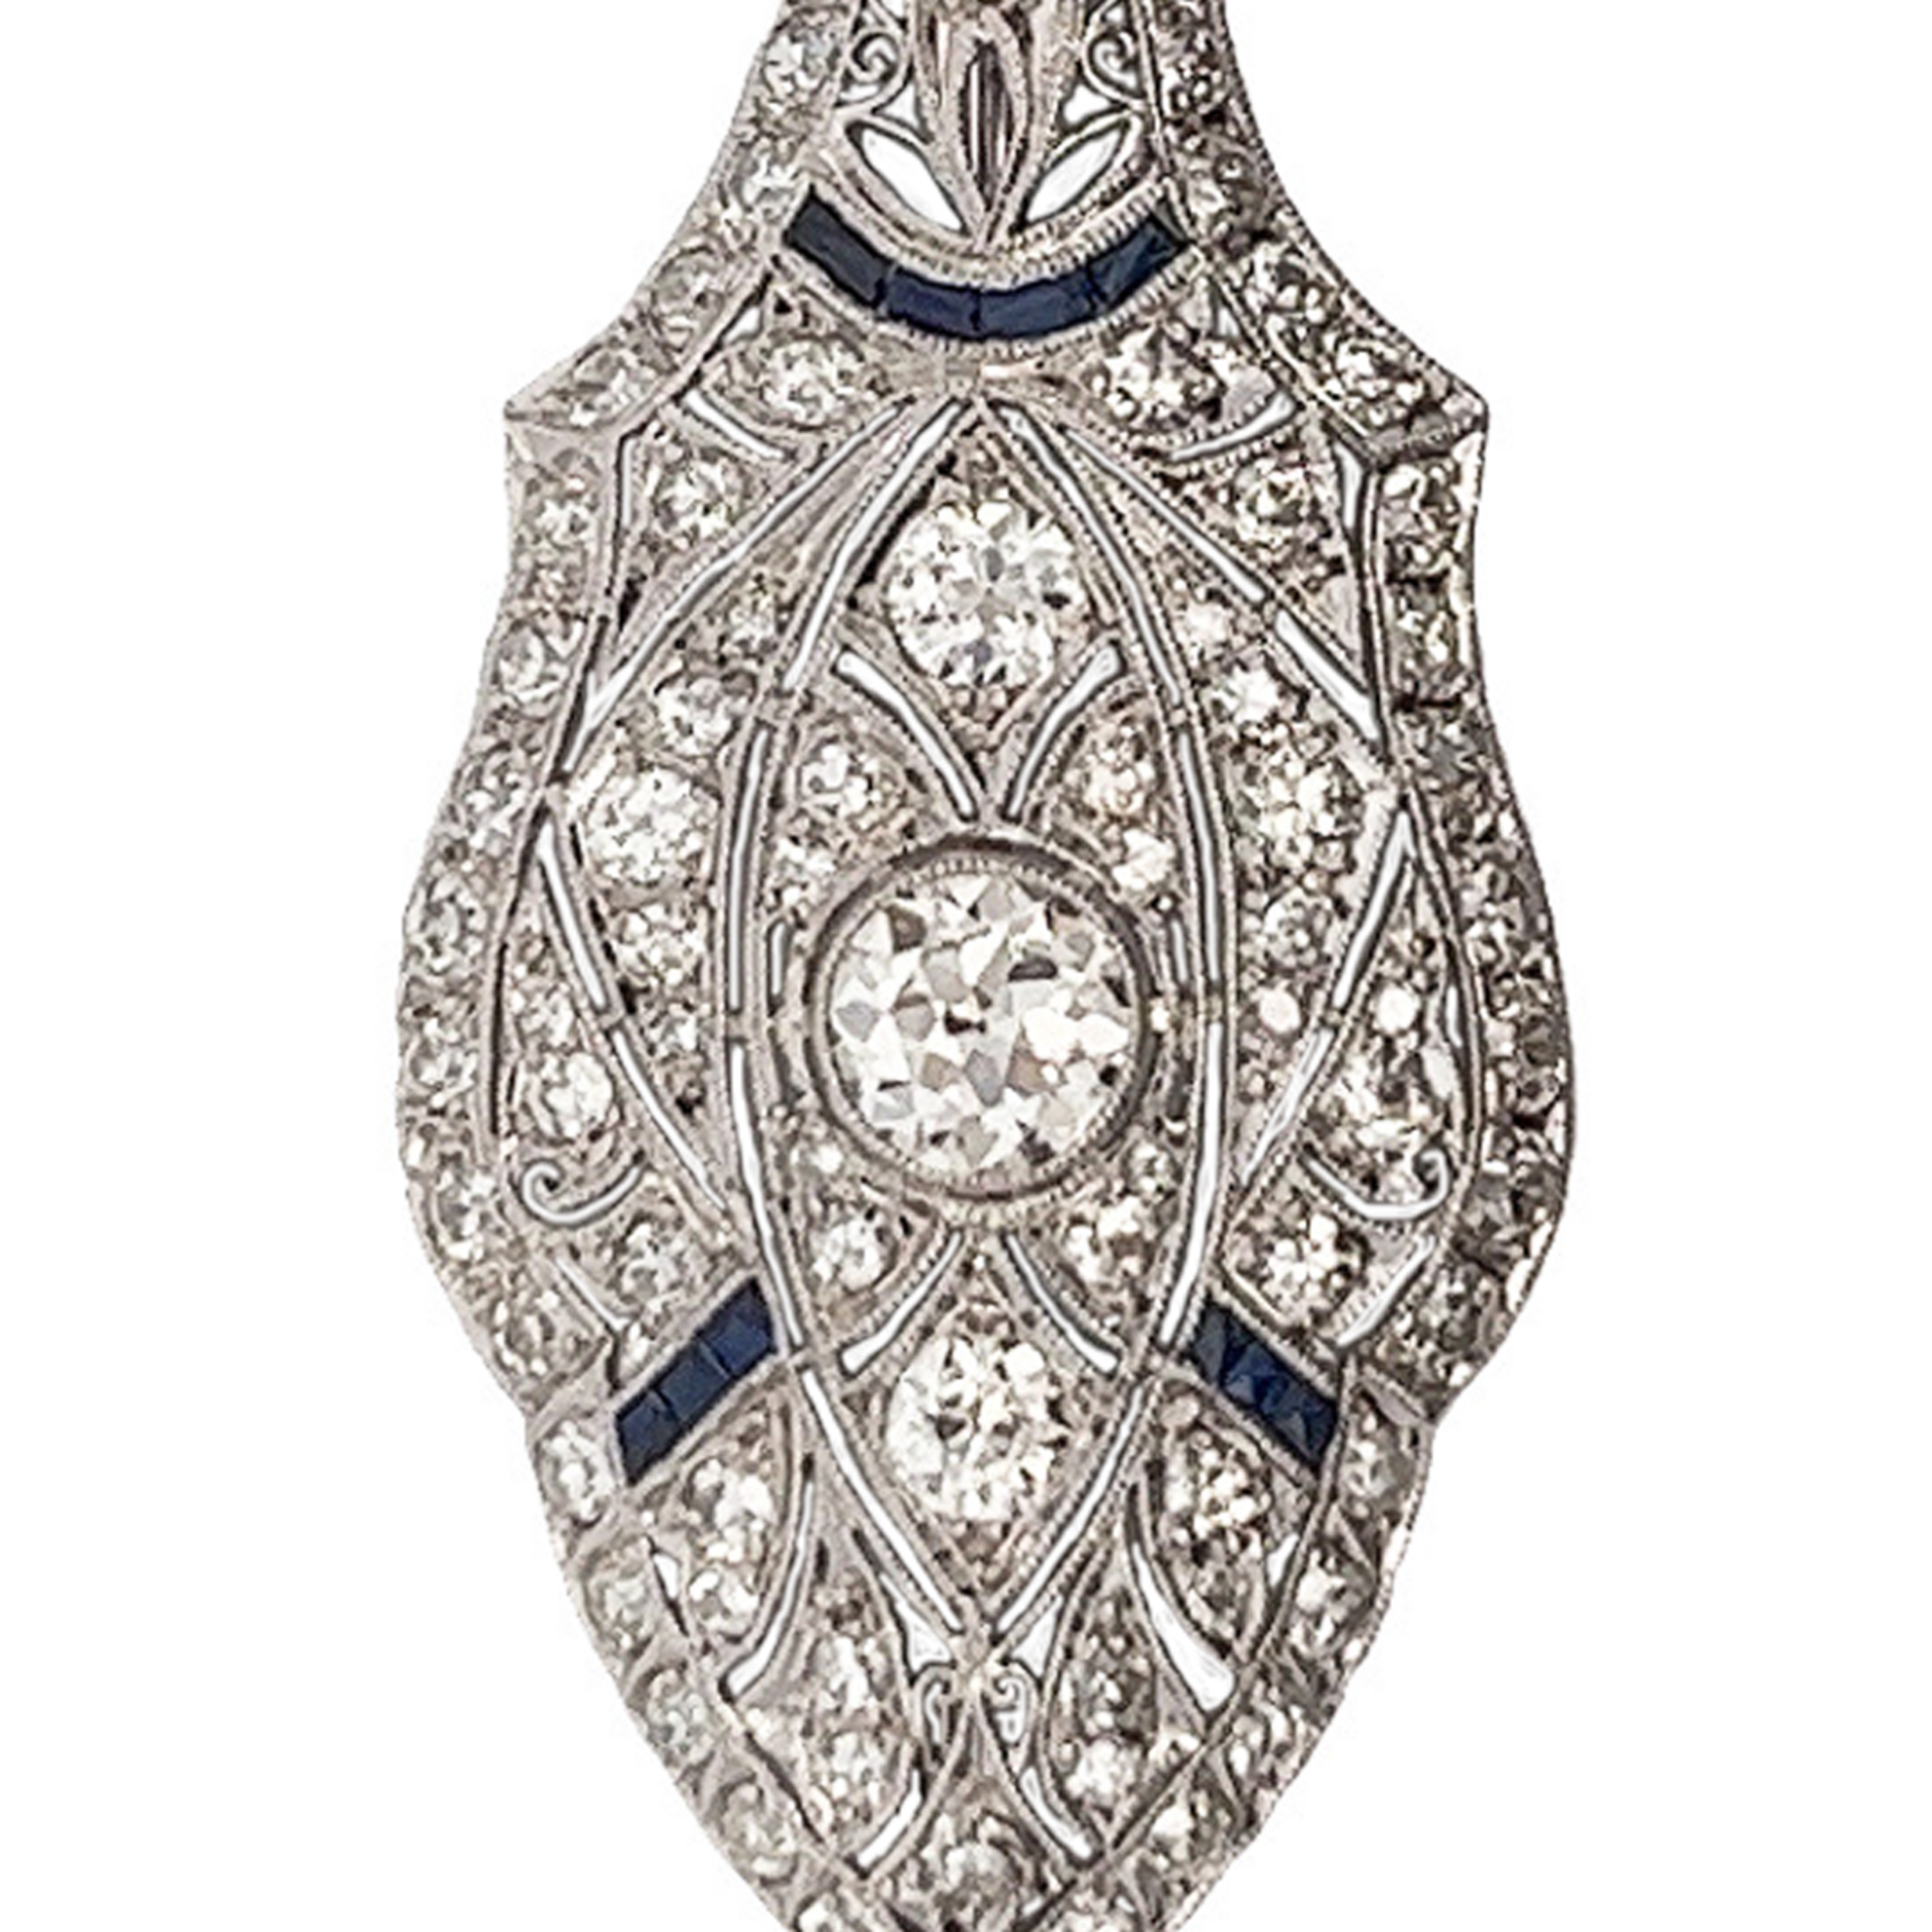 Antique Platinum Diamond & Sapphire Brooch/Pendant close-up details